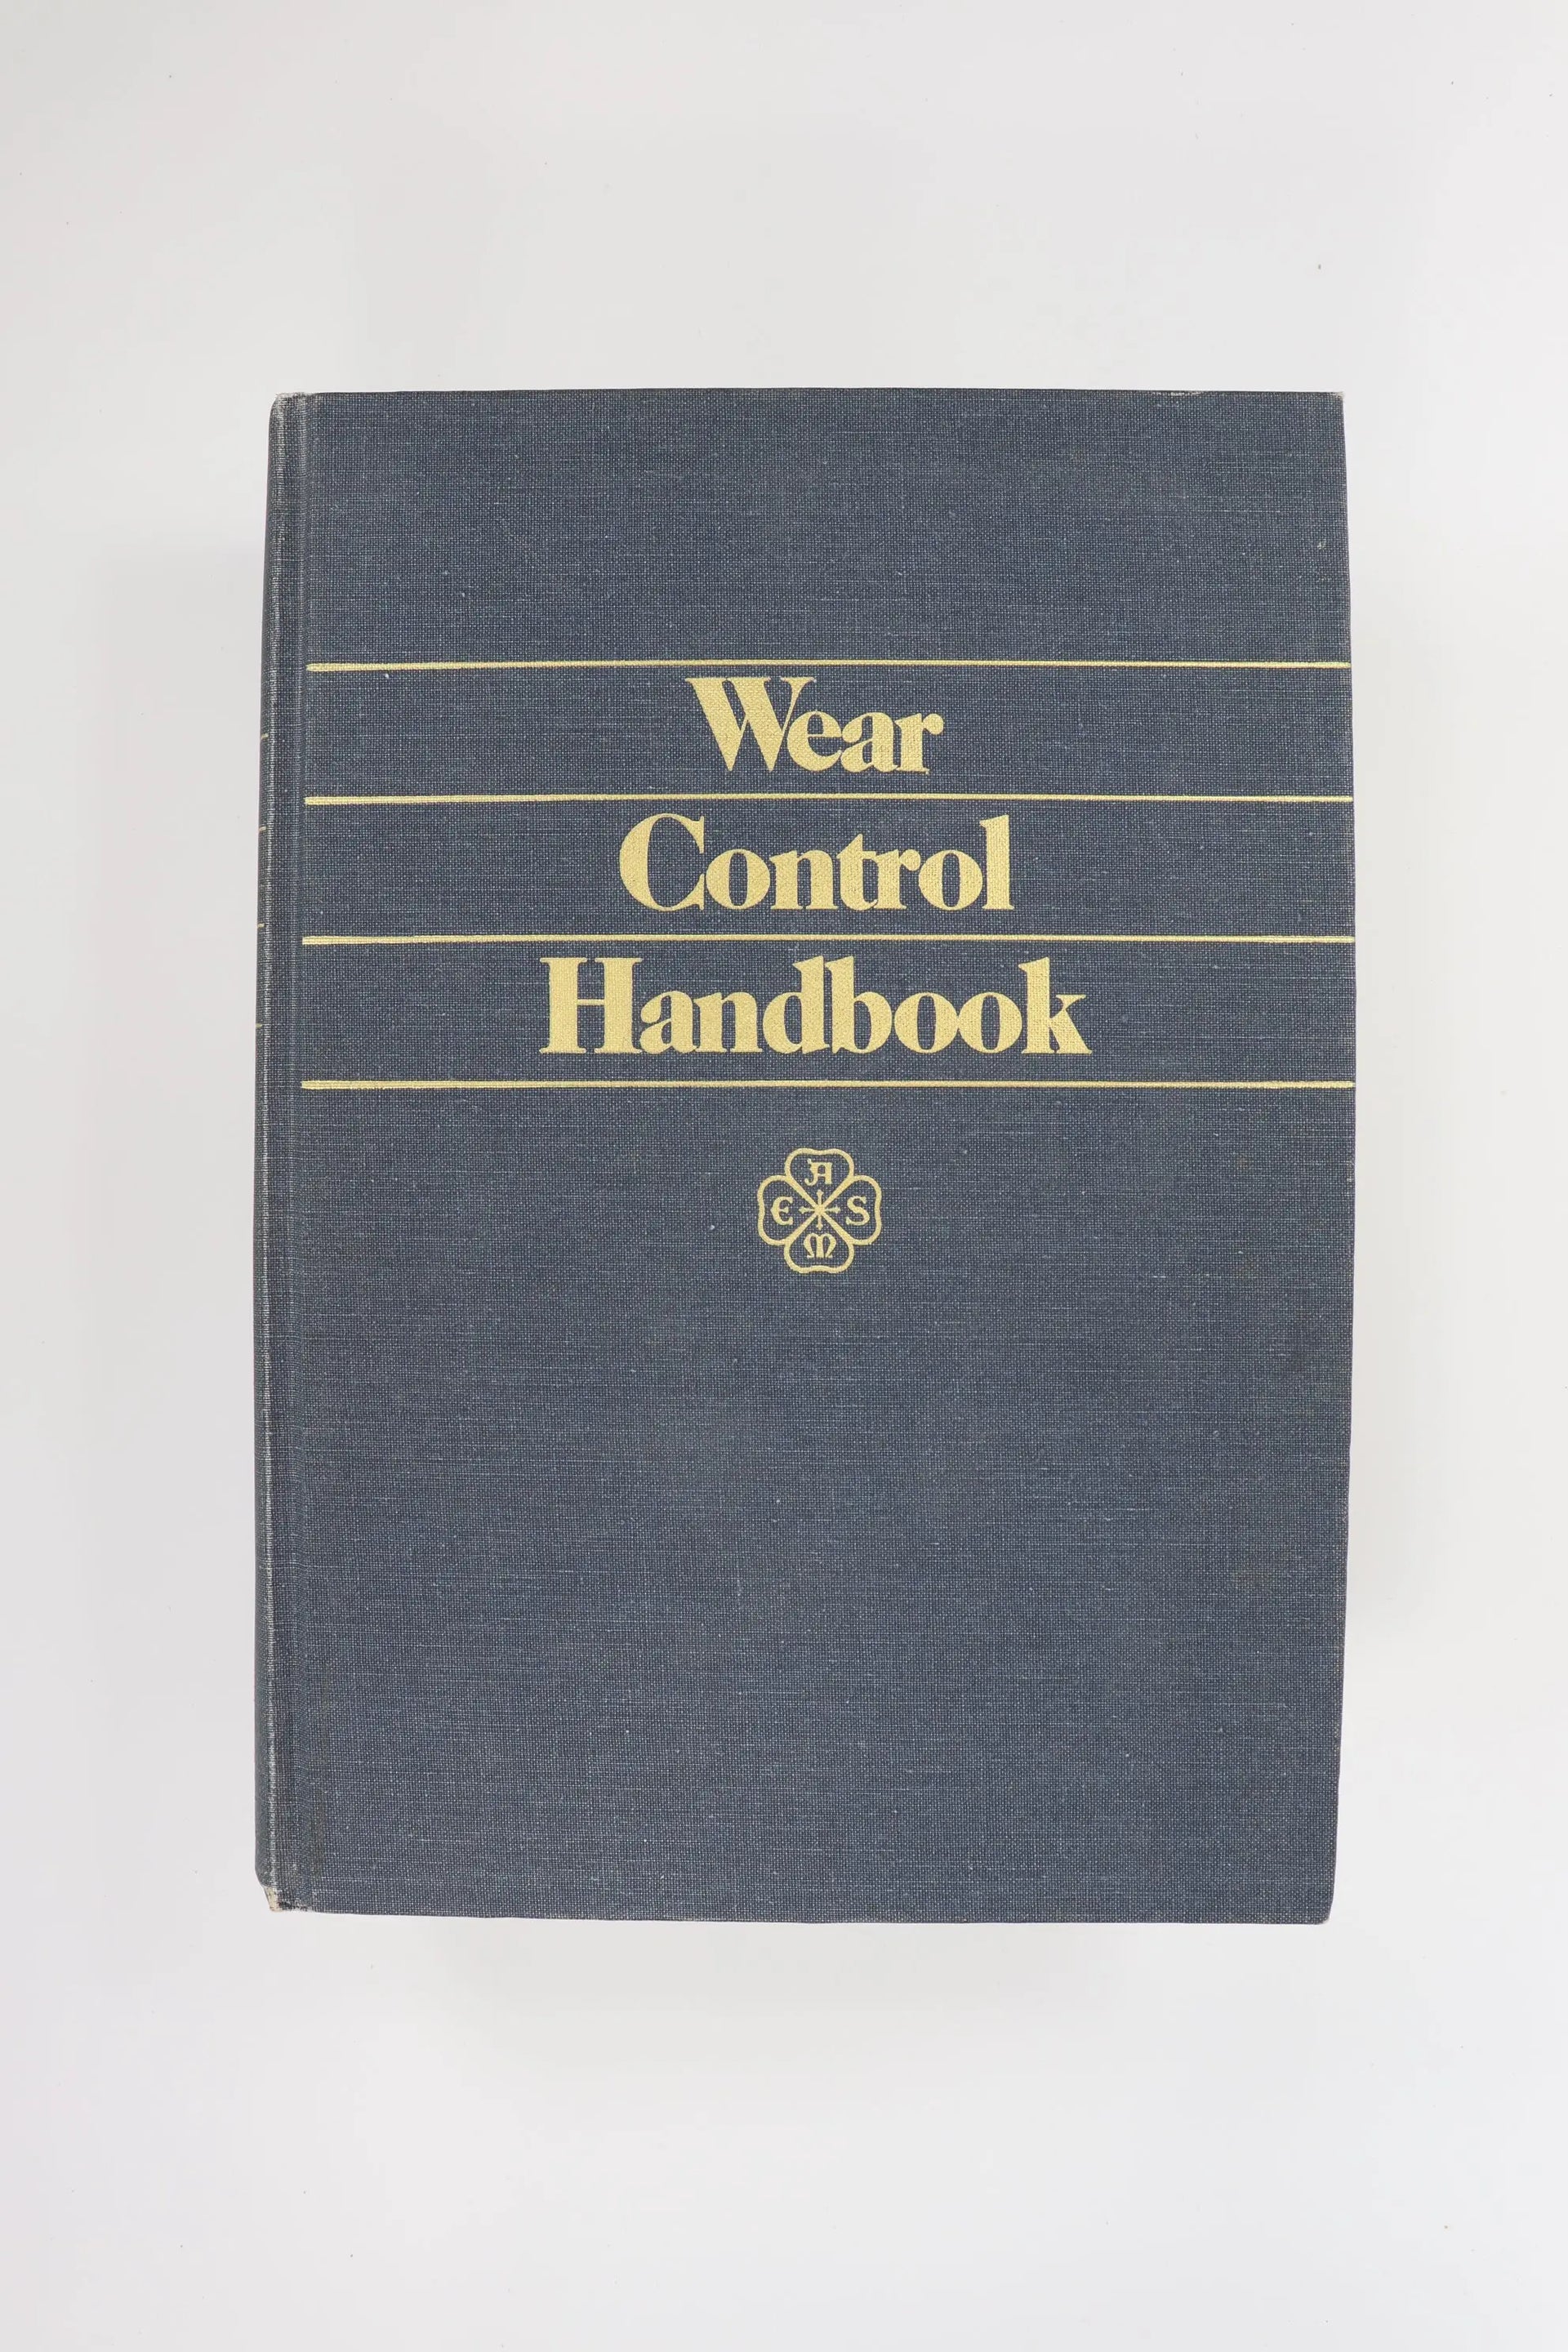 Wear Control Handbook